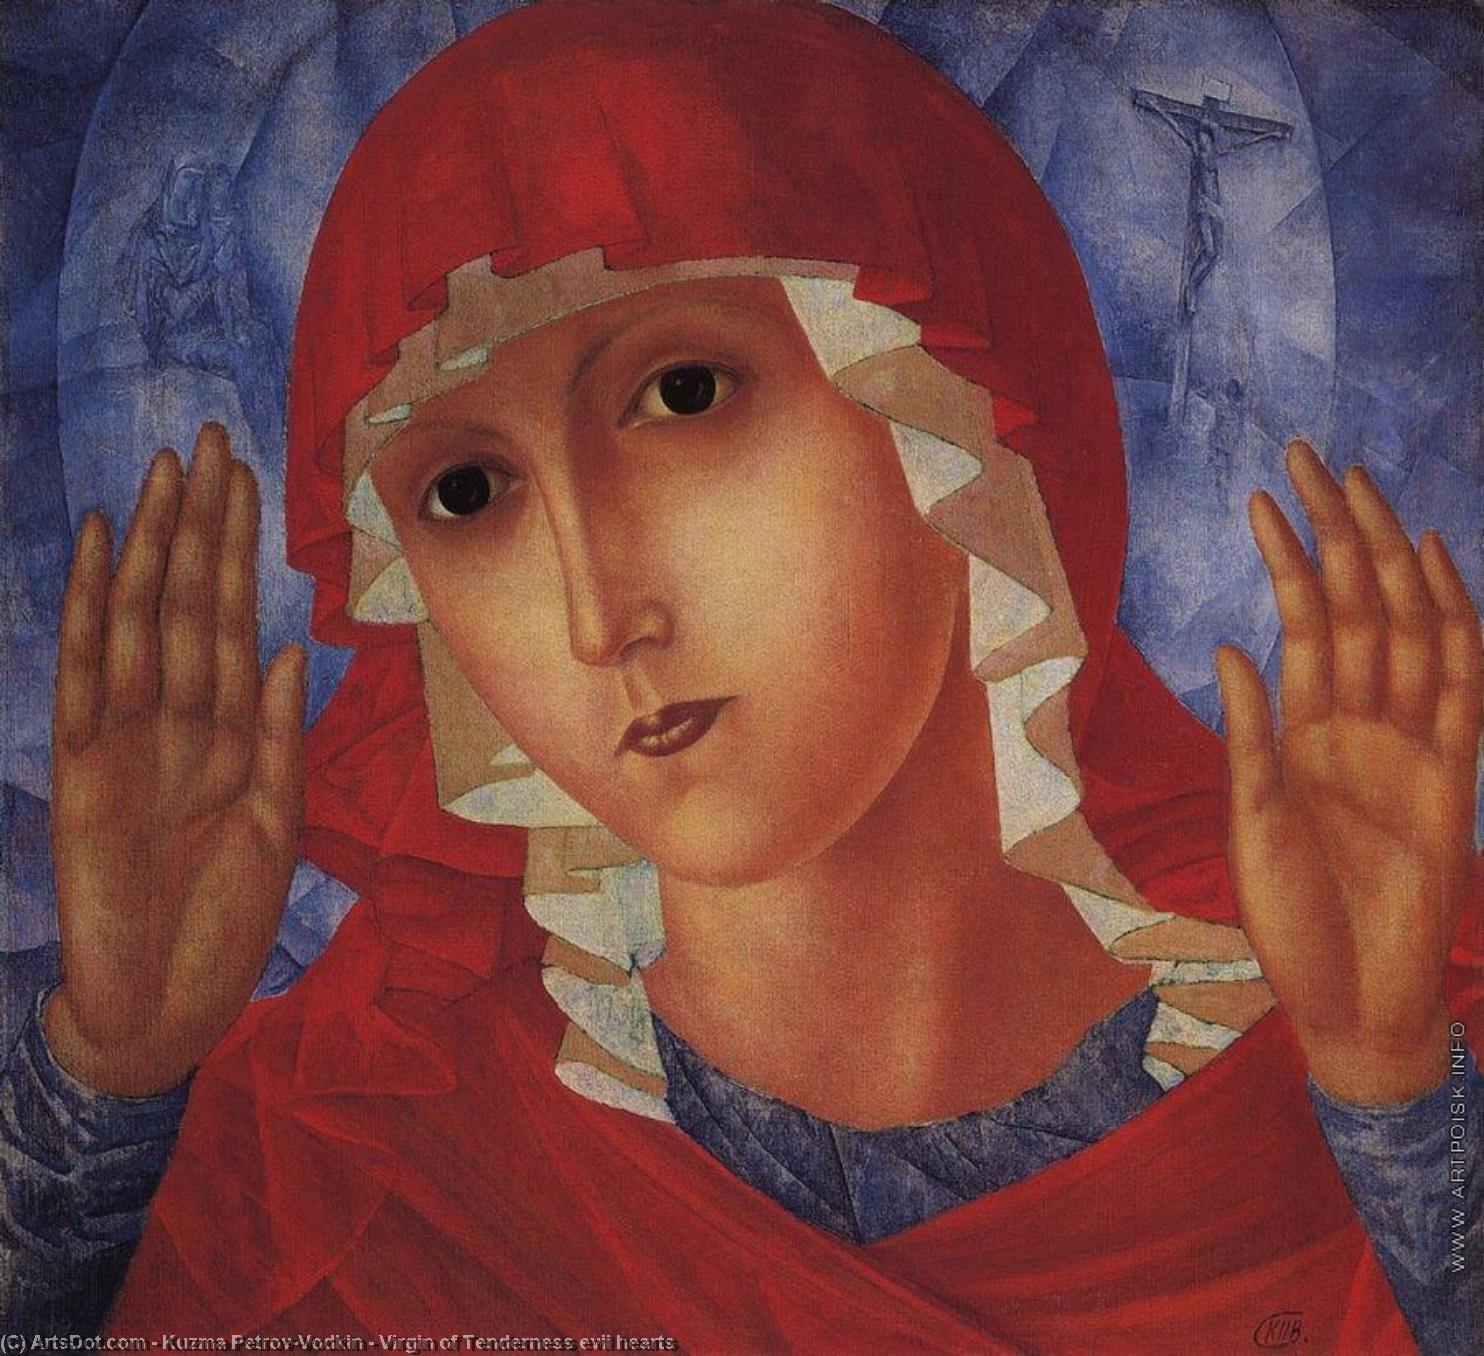 Wikioo.org - สารานุกรมวิจิตรศิลป์ - จิตรกรรม Kuzma Petrov-Vodkin - Virgin of Tenderness evil hearts